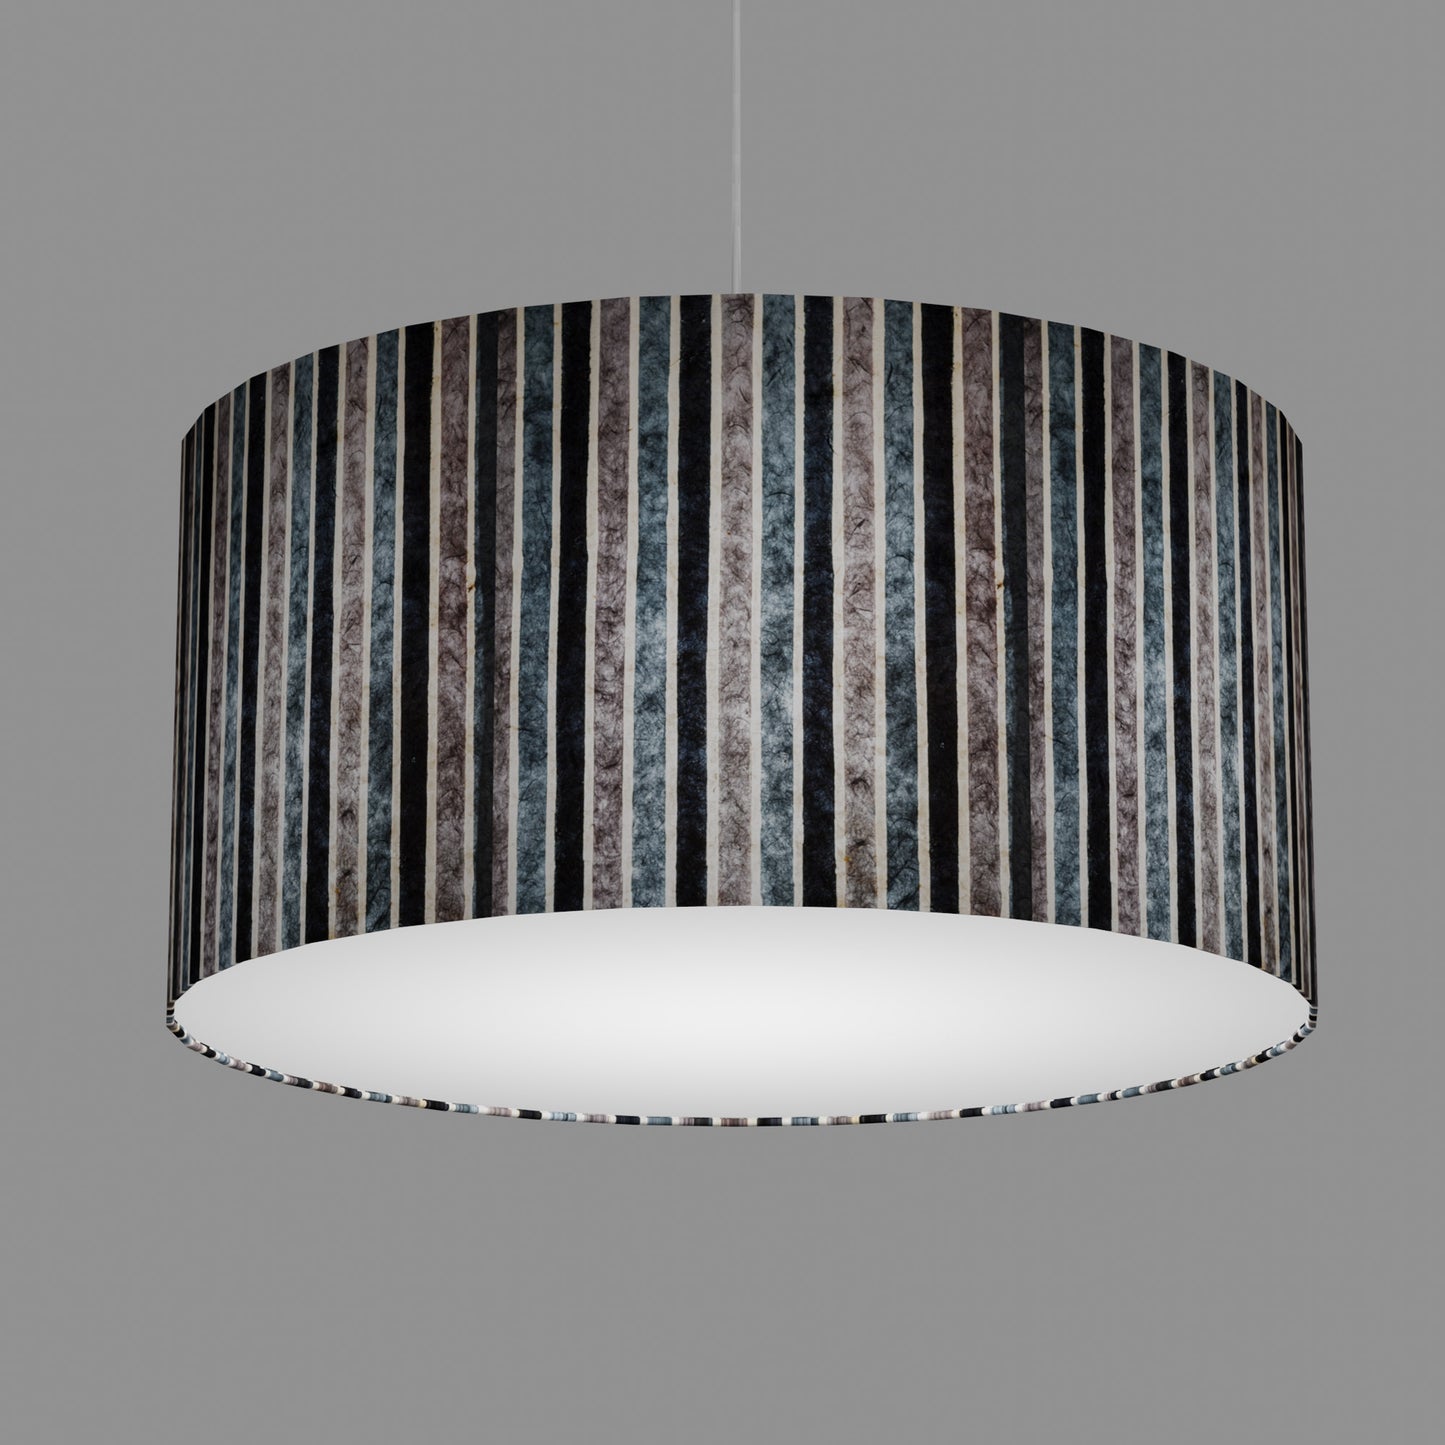 Drum Lamp Shade - P08 - Batik Stripes Grey, 60cm(d) x 30cm(h)